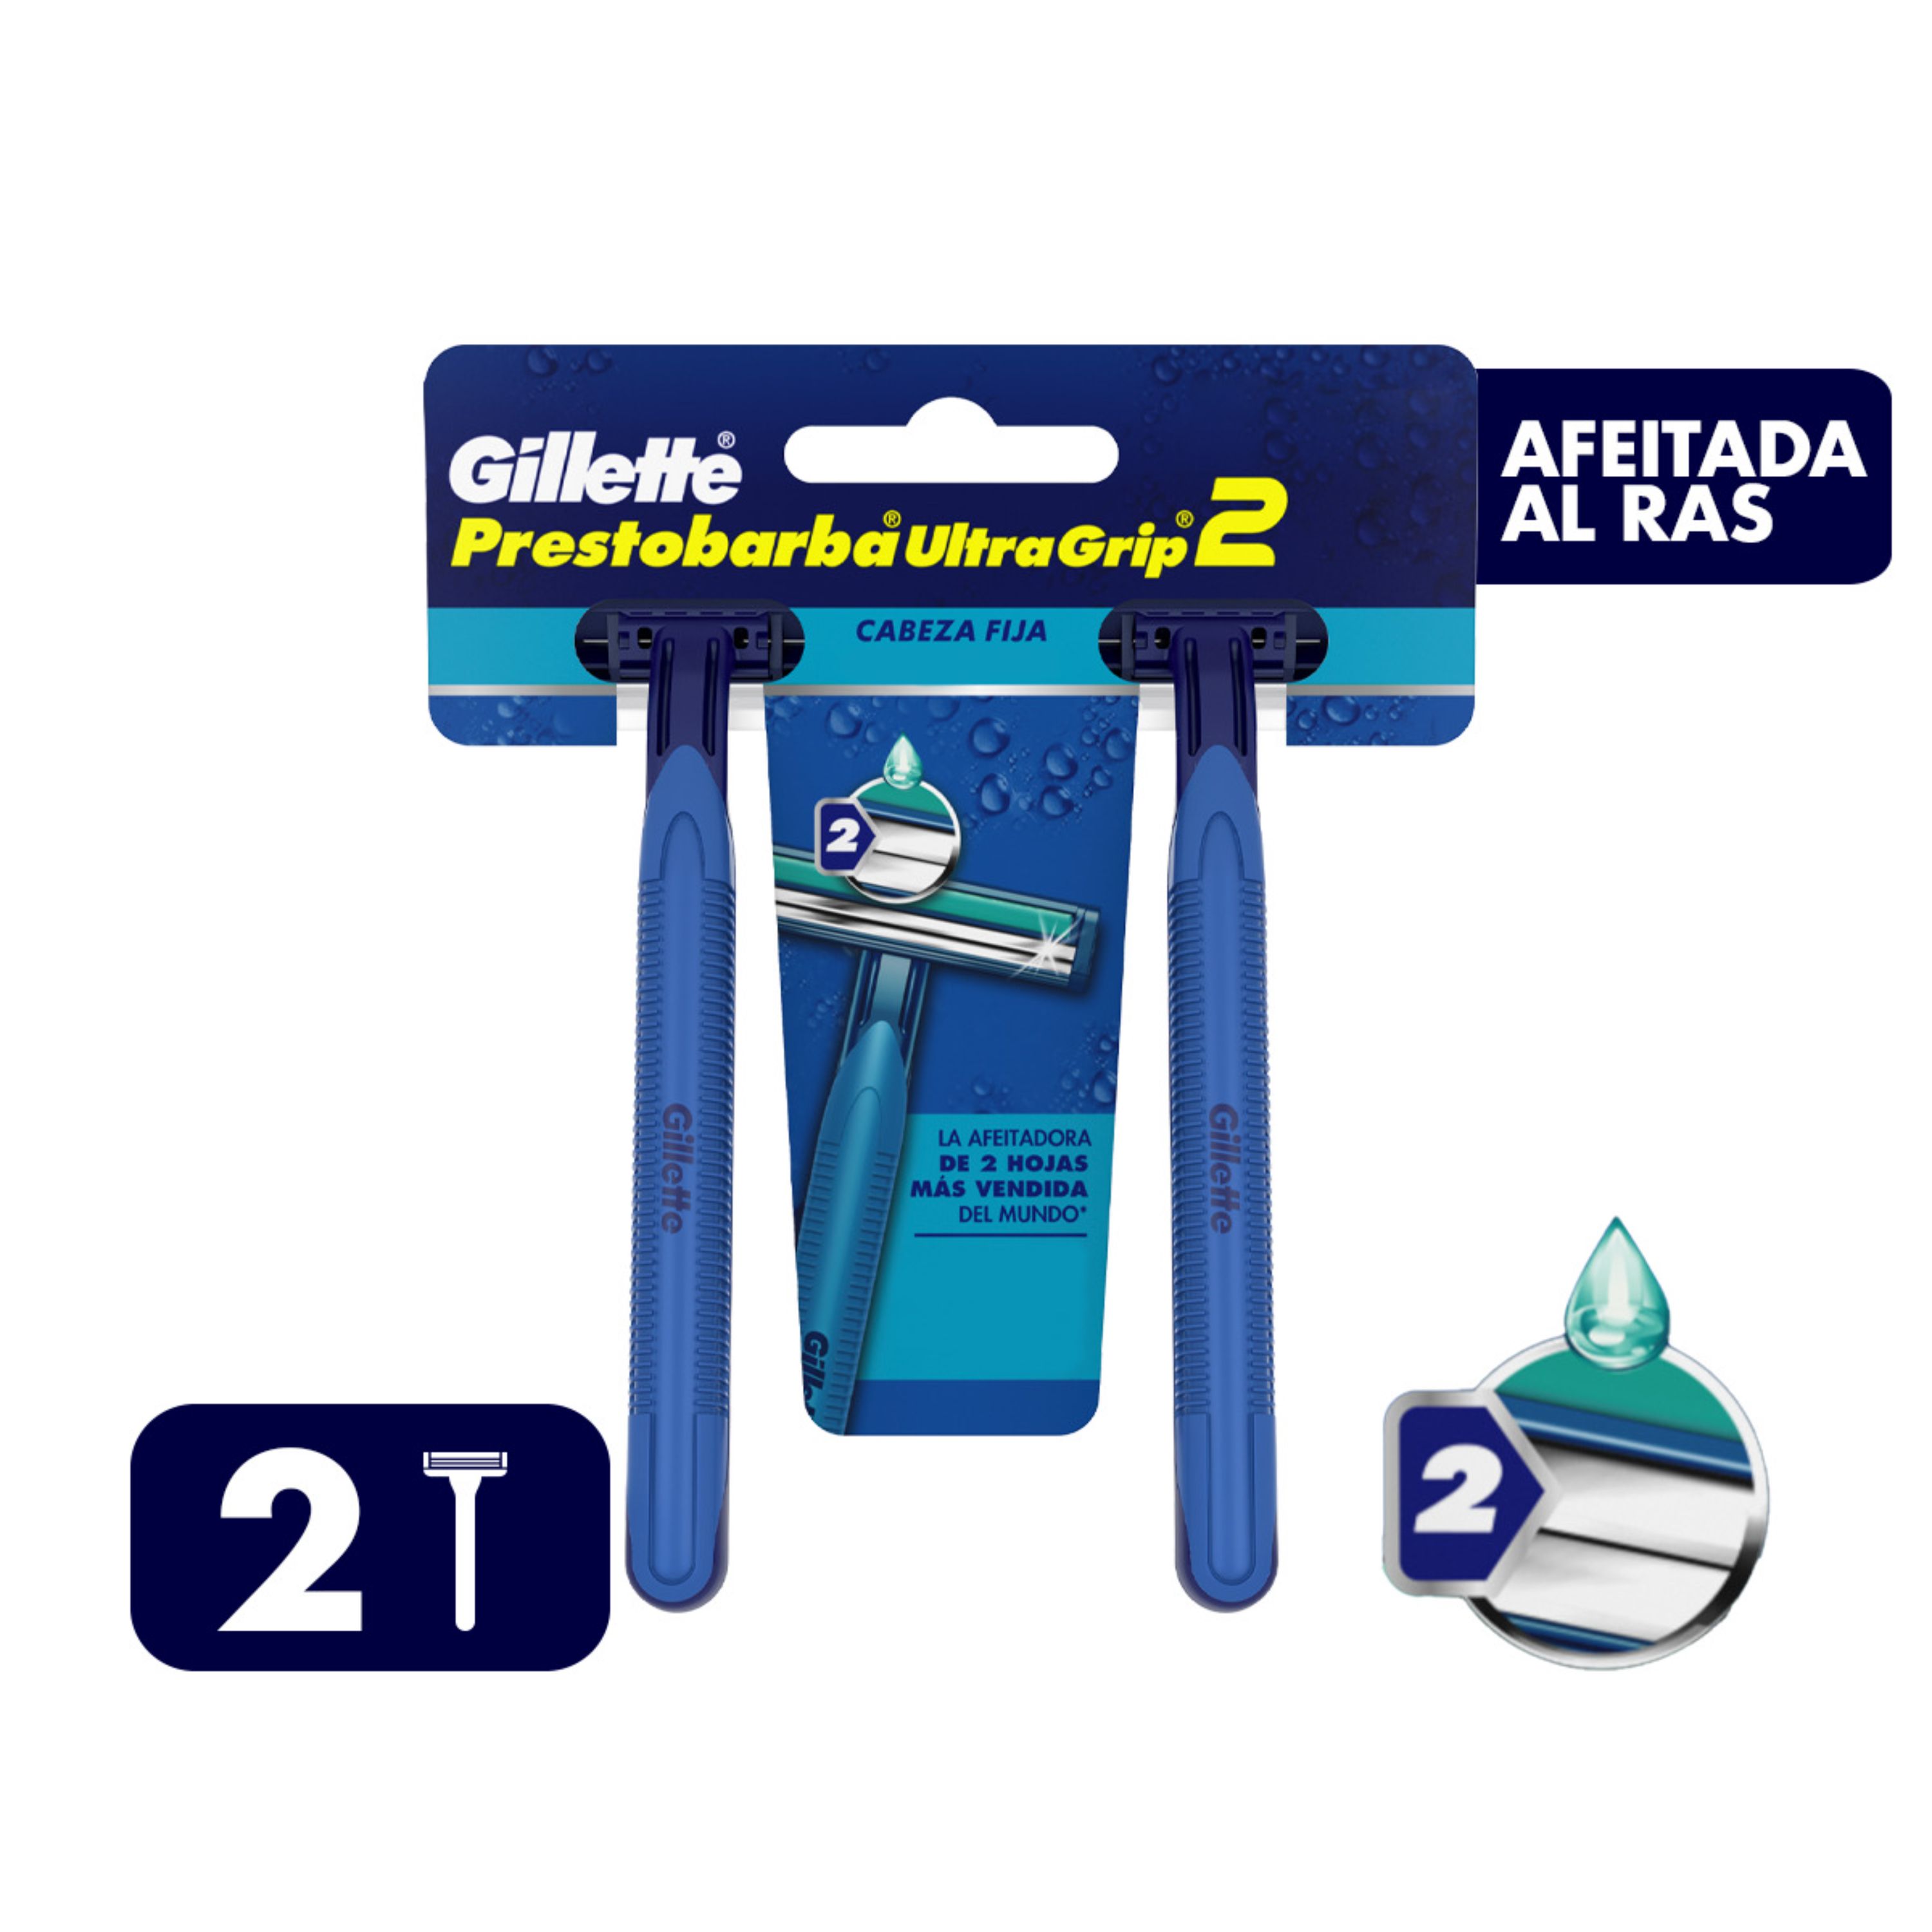 M-quinas-Para-Afeitar-Desechable-Gillette-Prestobarba-UltraGrip2-2-Unidades-1-71378